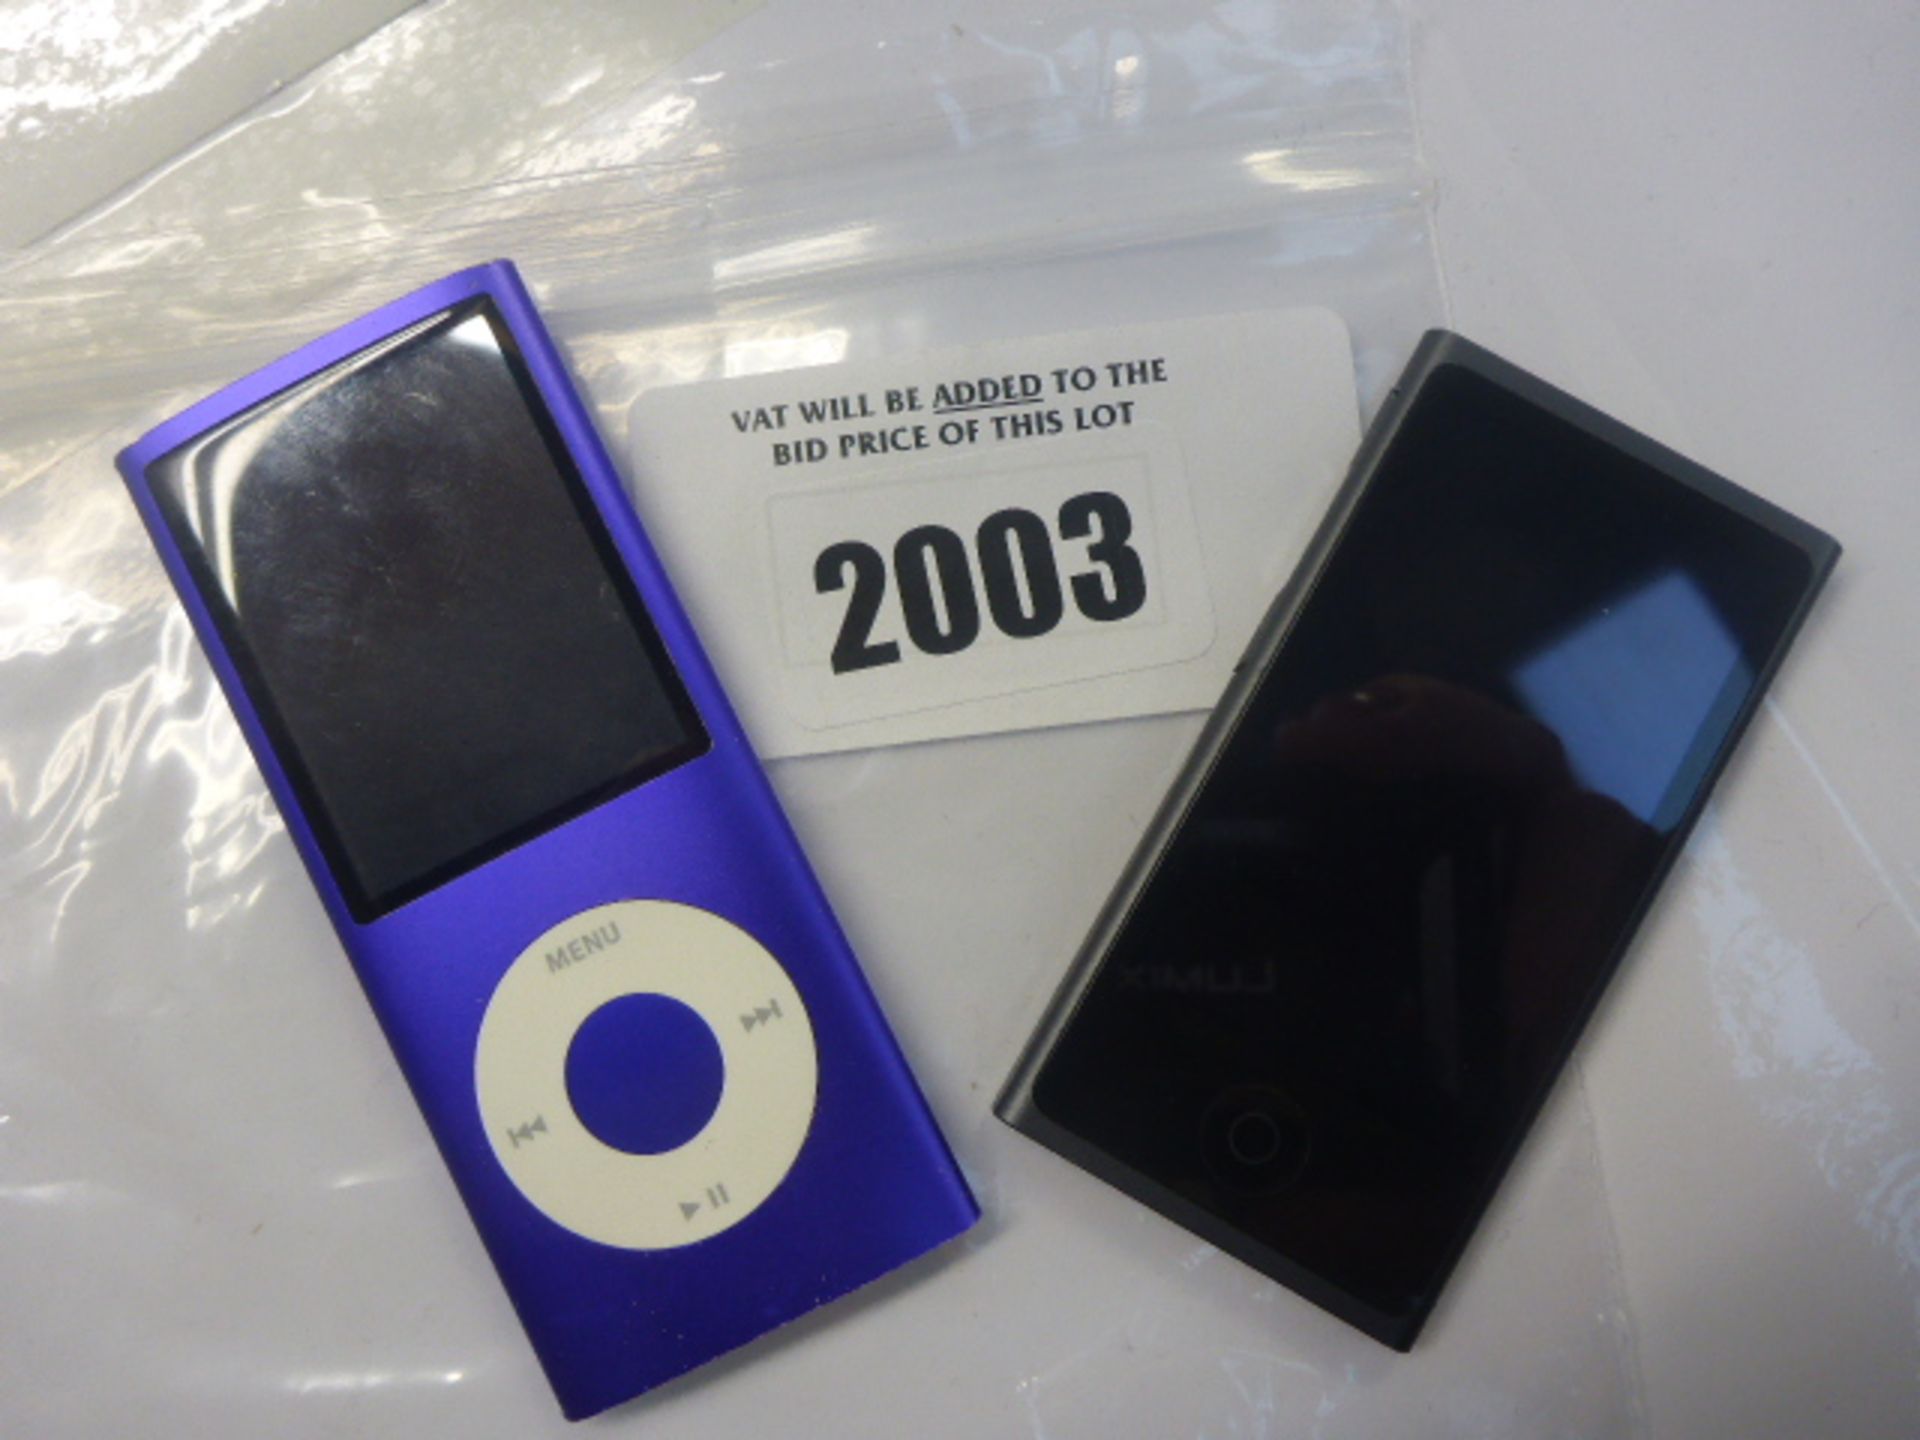 Apple iPod Nano touch 16gb and a 4th generation iPod Nano.